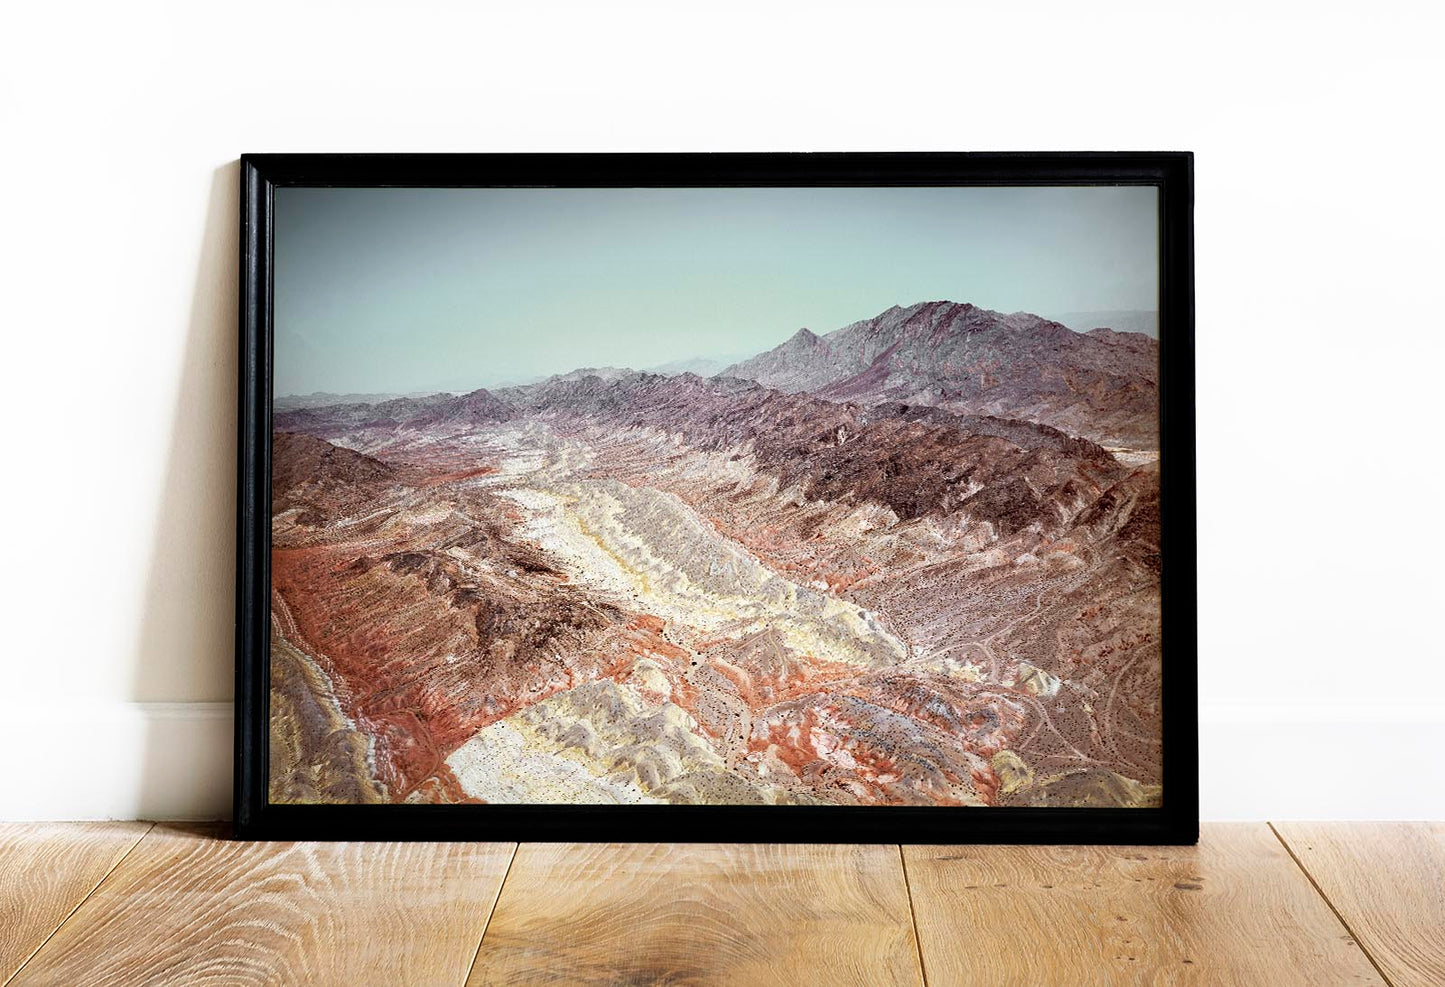 The Barron Nevada Desert near Las Vegas by Carol M. Highsmith